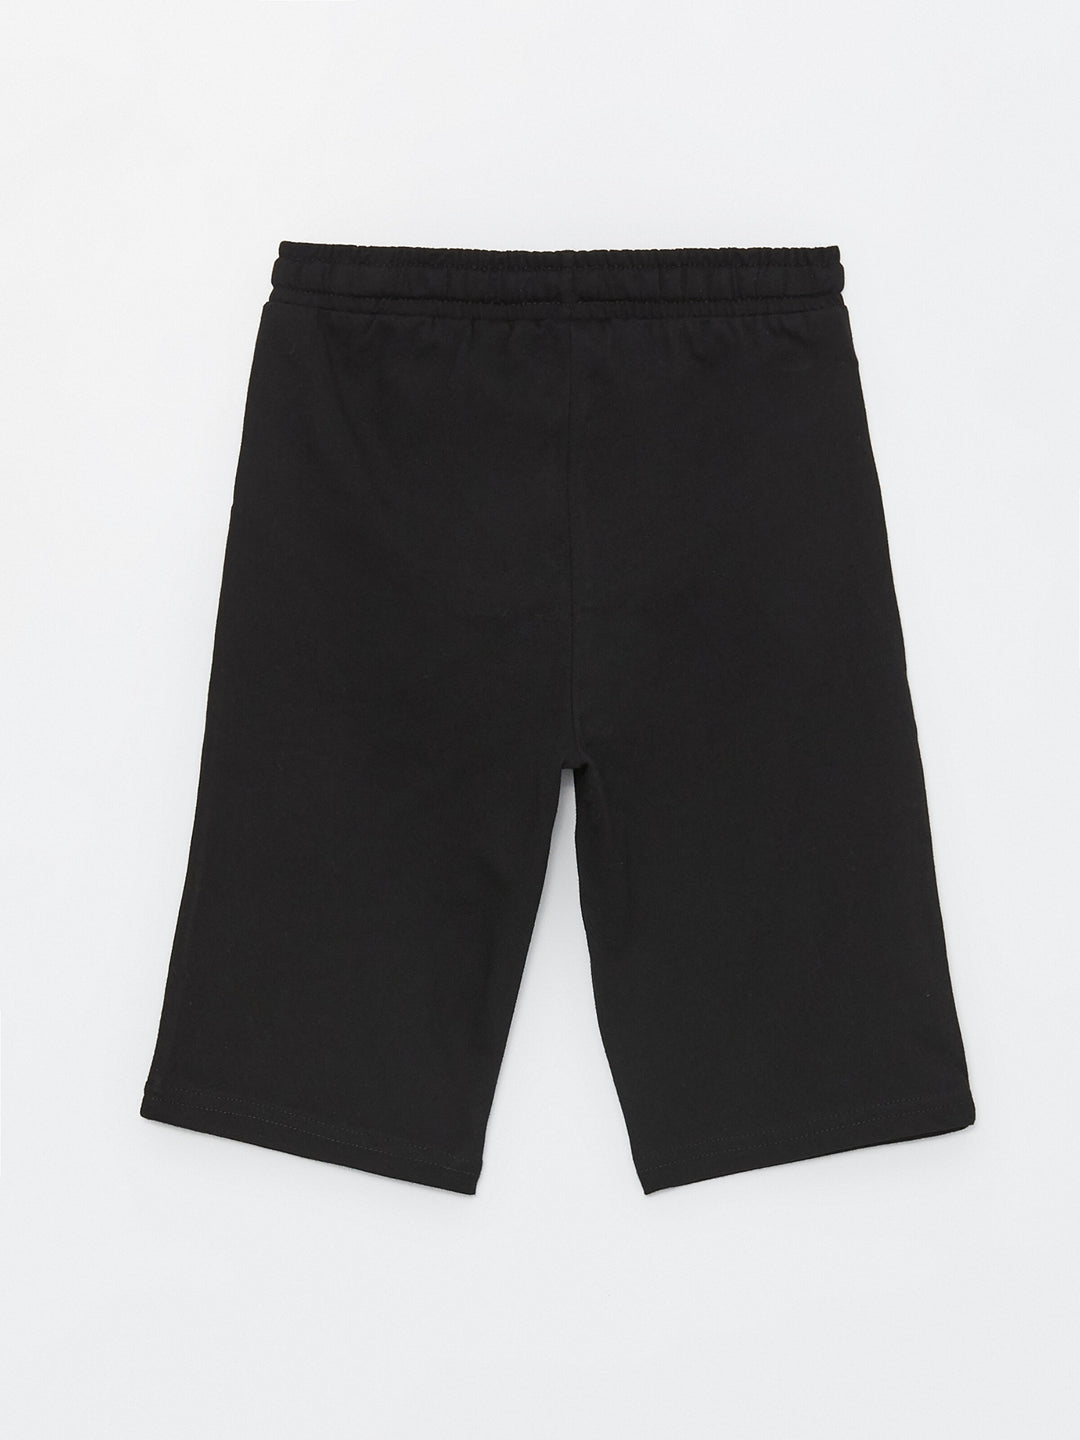 Printed Boys Shorts With Elastic Waist